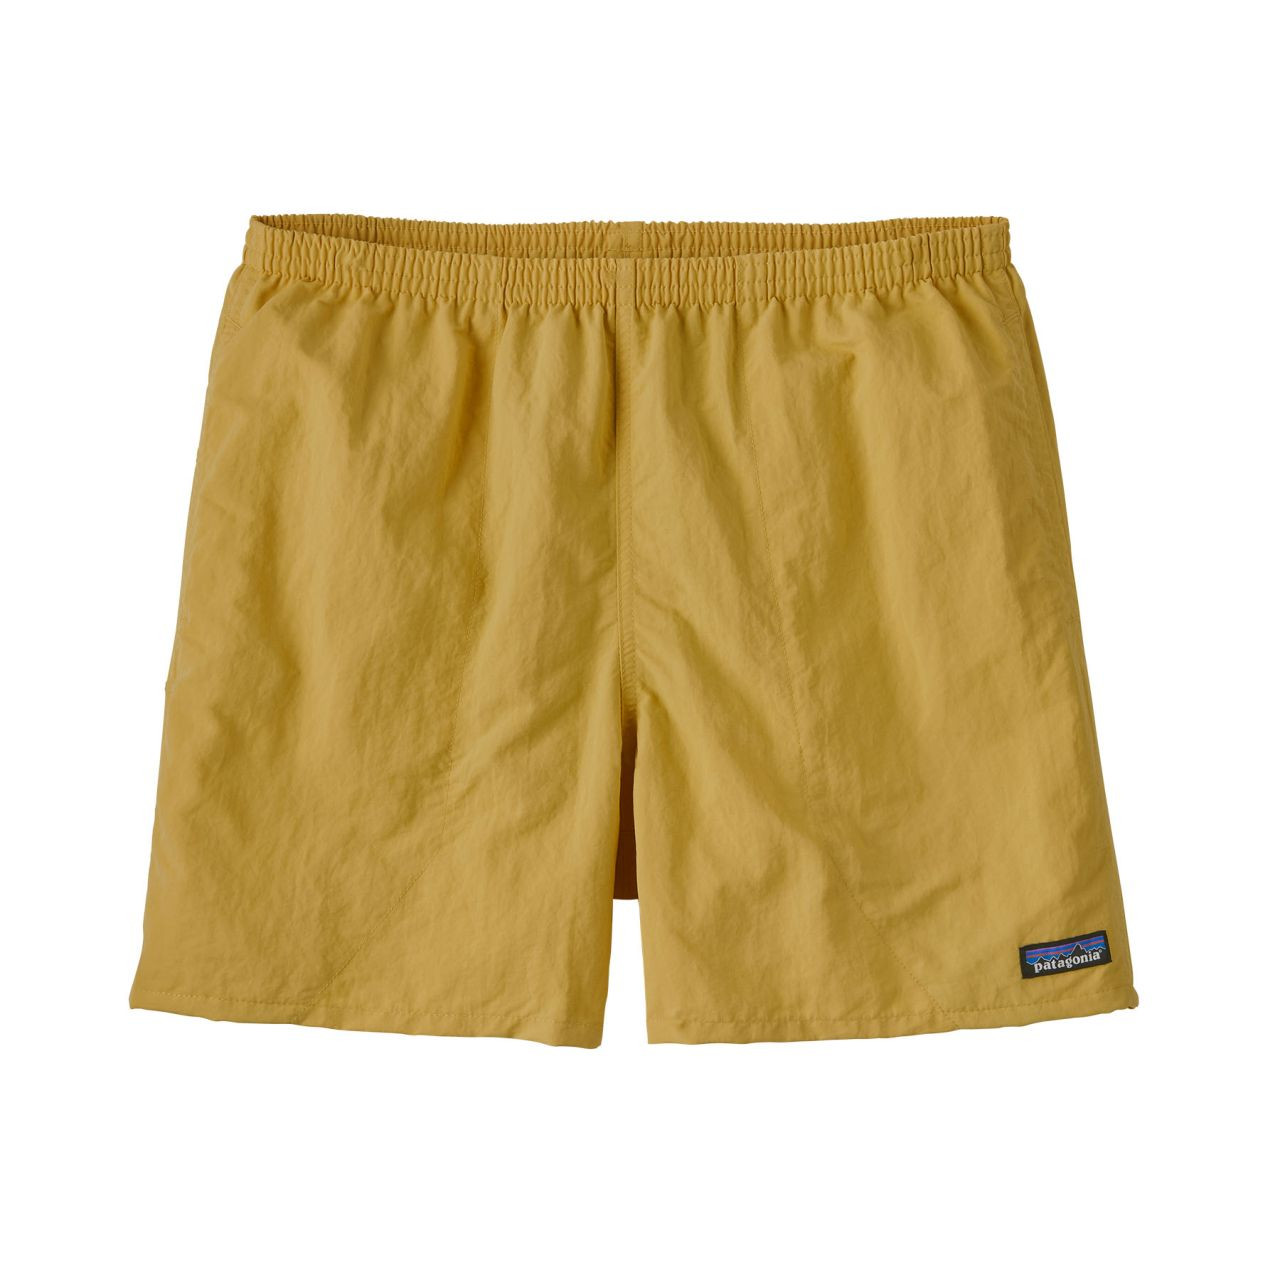 Patagonia Baggies Shorts - 5 in. - Men's | Shorts | BackcountryGear.com